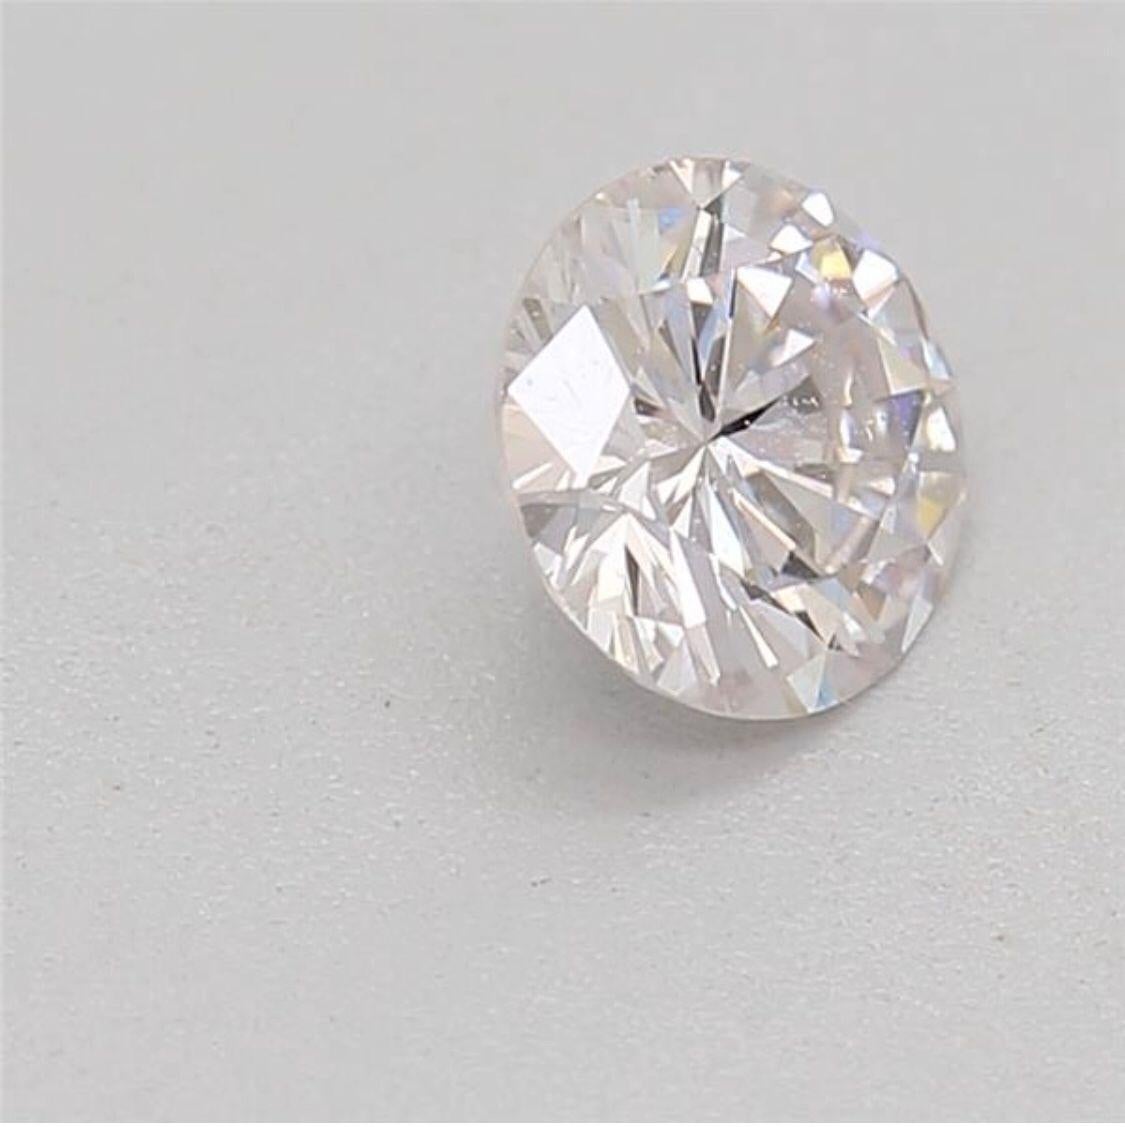 Diamant rose pâle taille ronde de 0,31 carat de pureté SI1 certifié CGL Neuf - En vente à Kowloon, HK